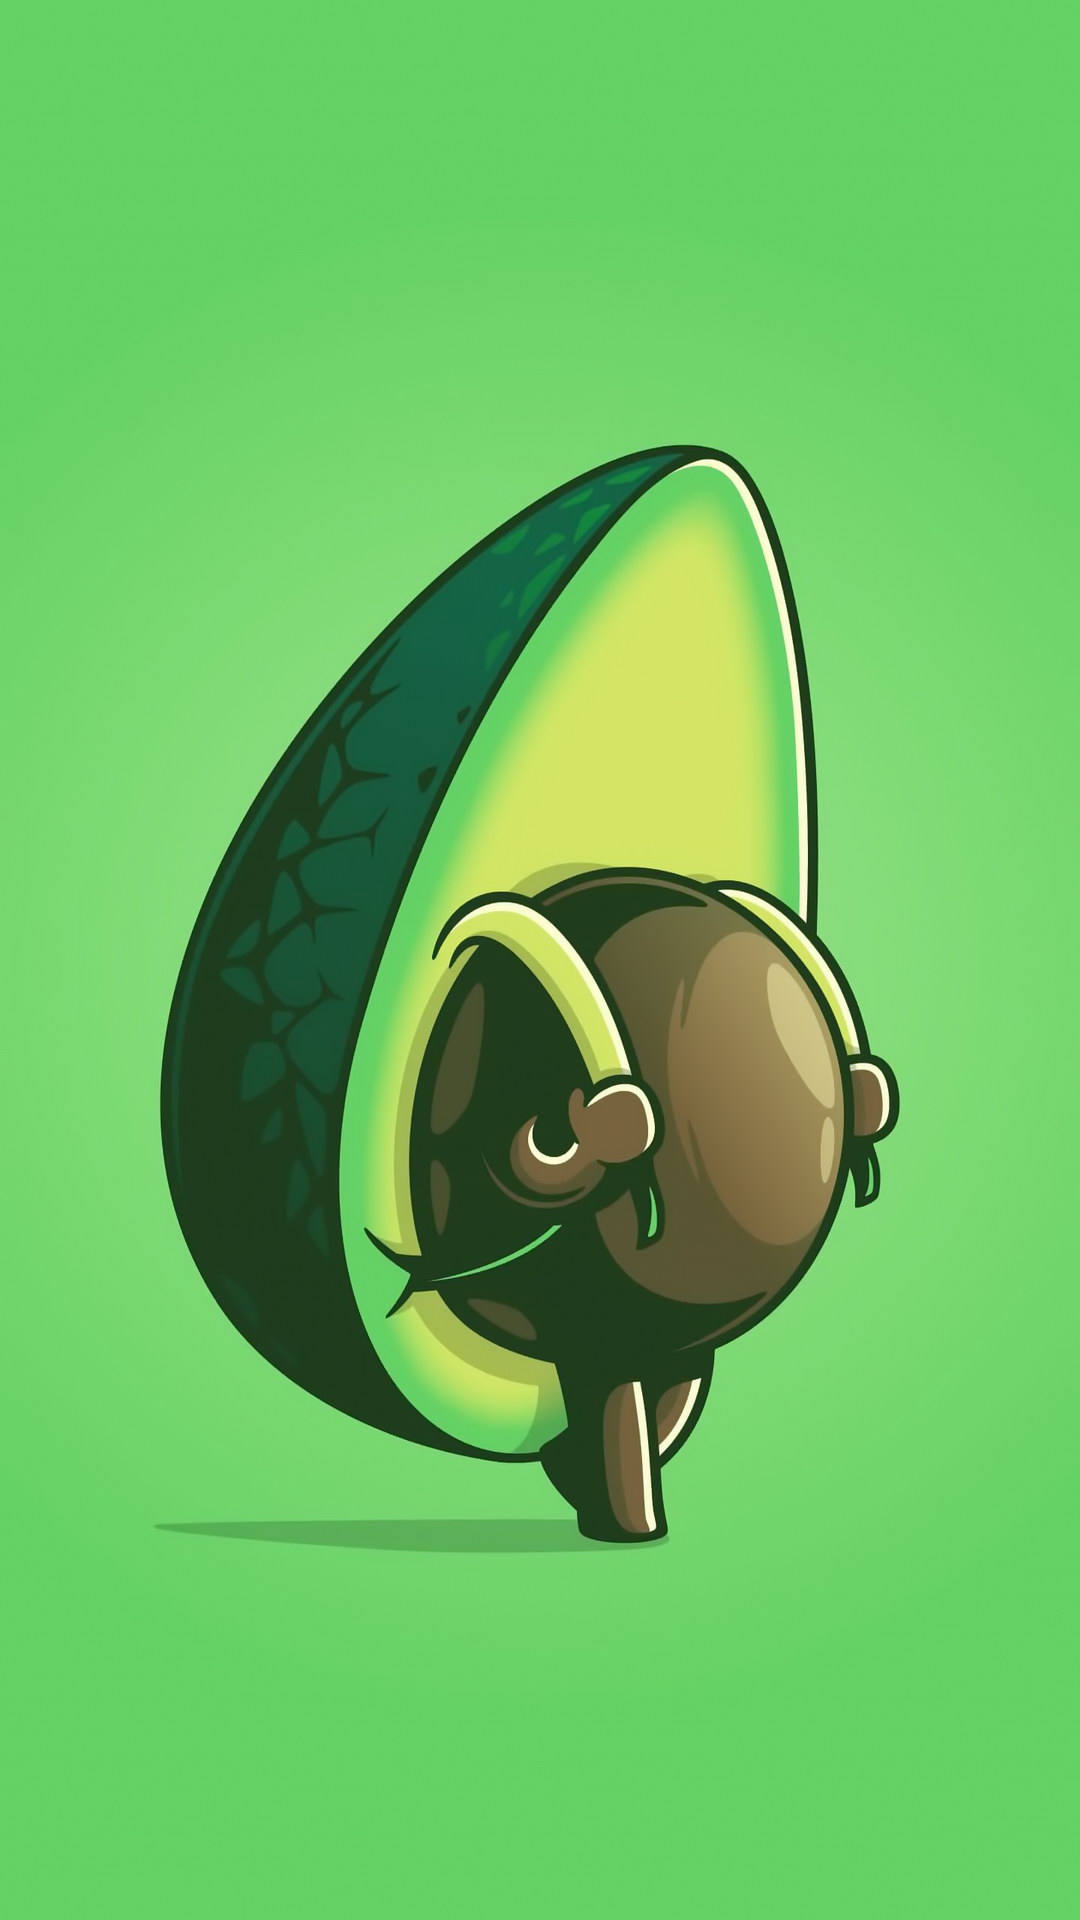 Download Cute Avocado Wallpapers Free for Android - Cute Avocado Wallpapers  APK Download - STEPrimo.com